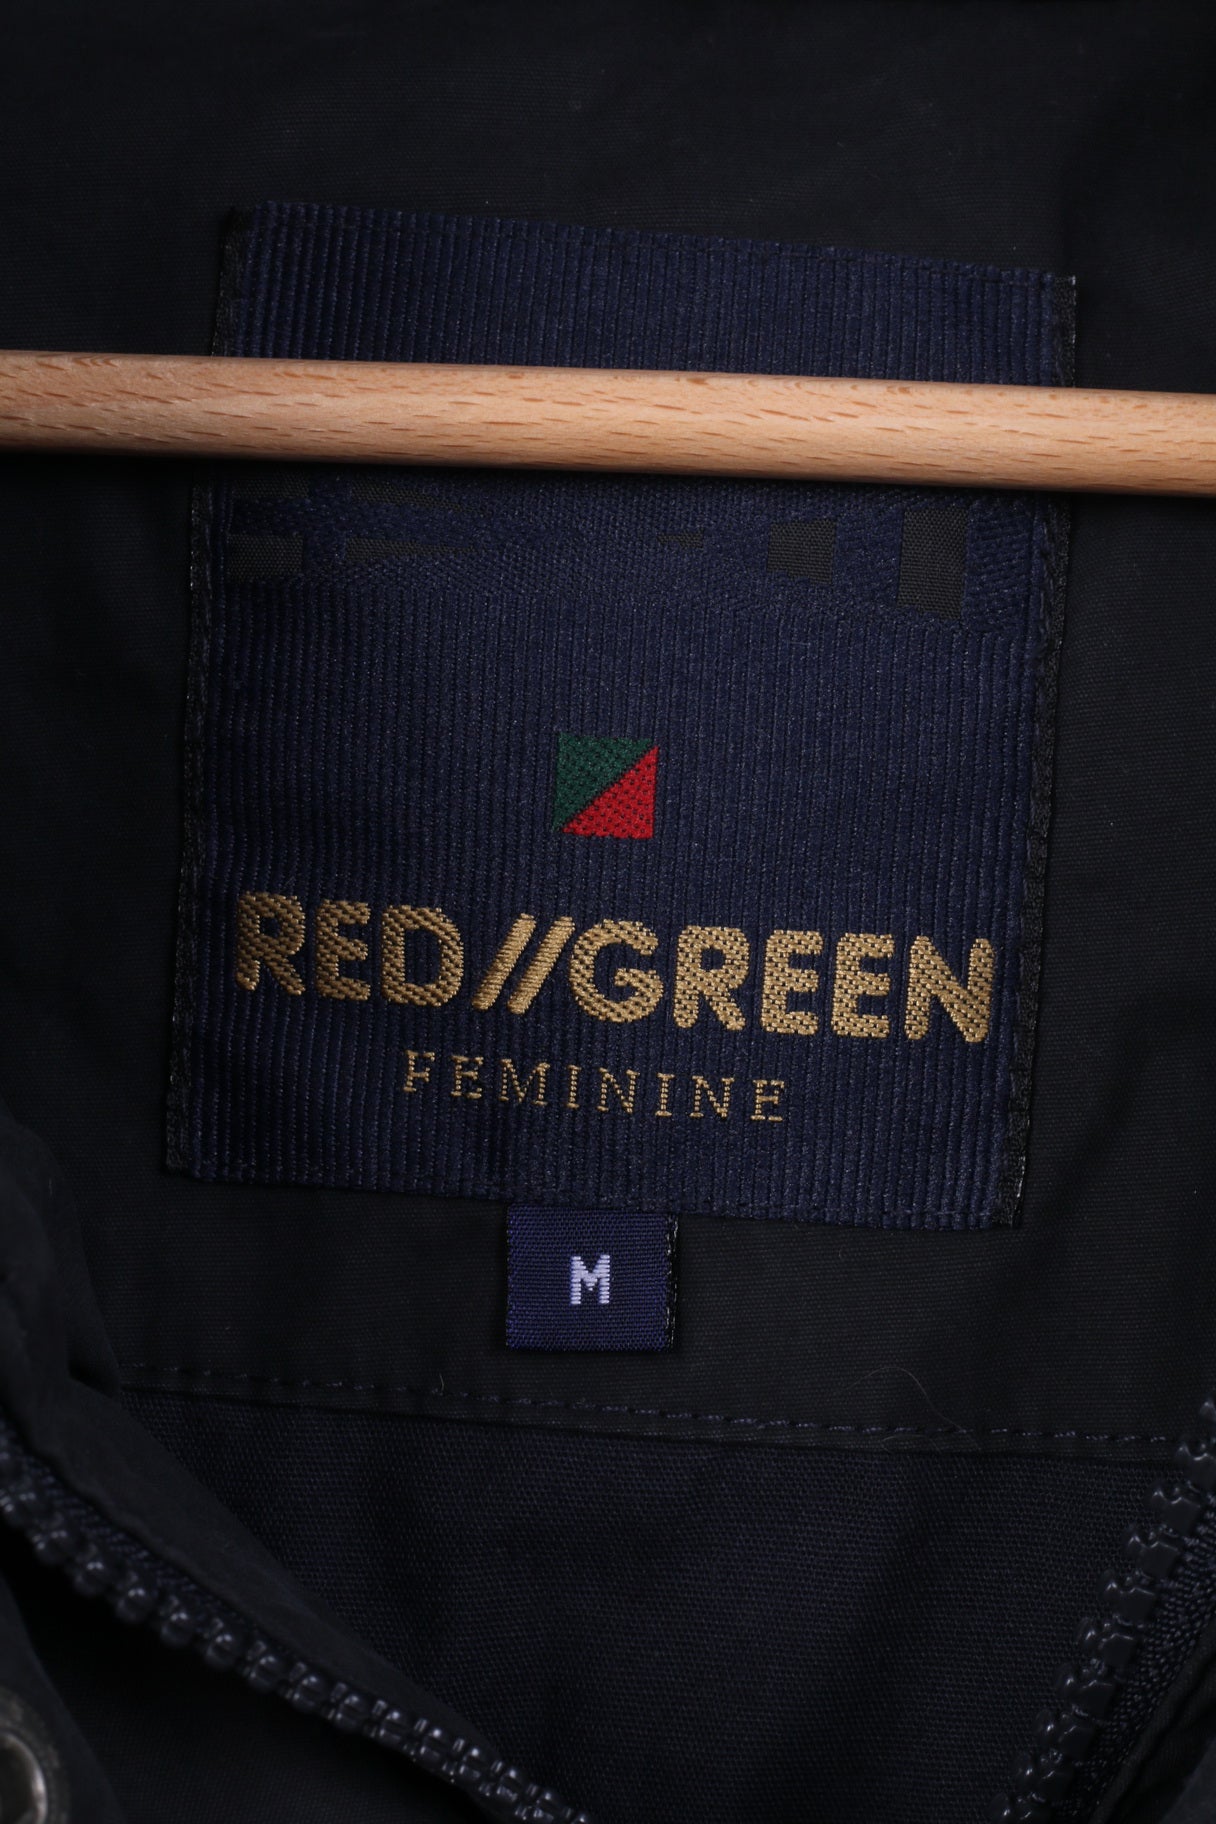 Red Green Of Scandinavia Feminine Womens M Jacket Hooded Black Cotton